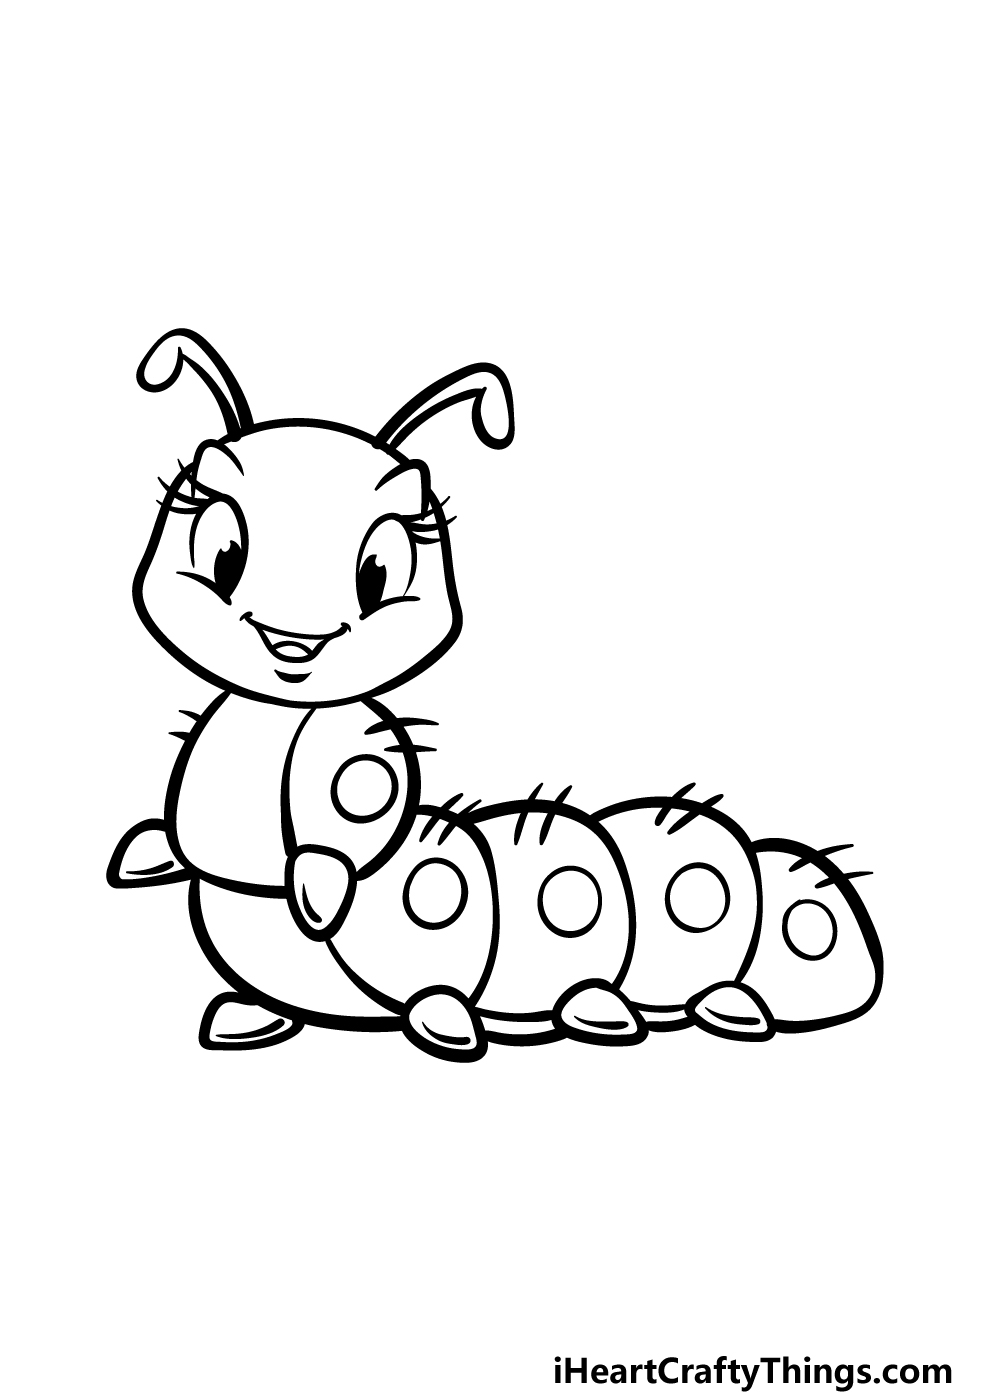 how to draw a cartoon caterpillar step 5